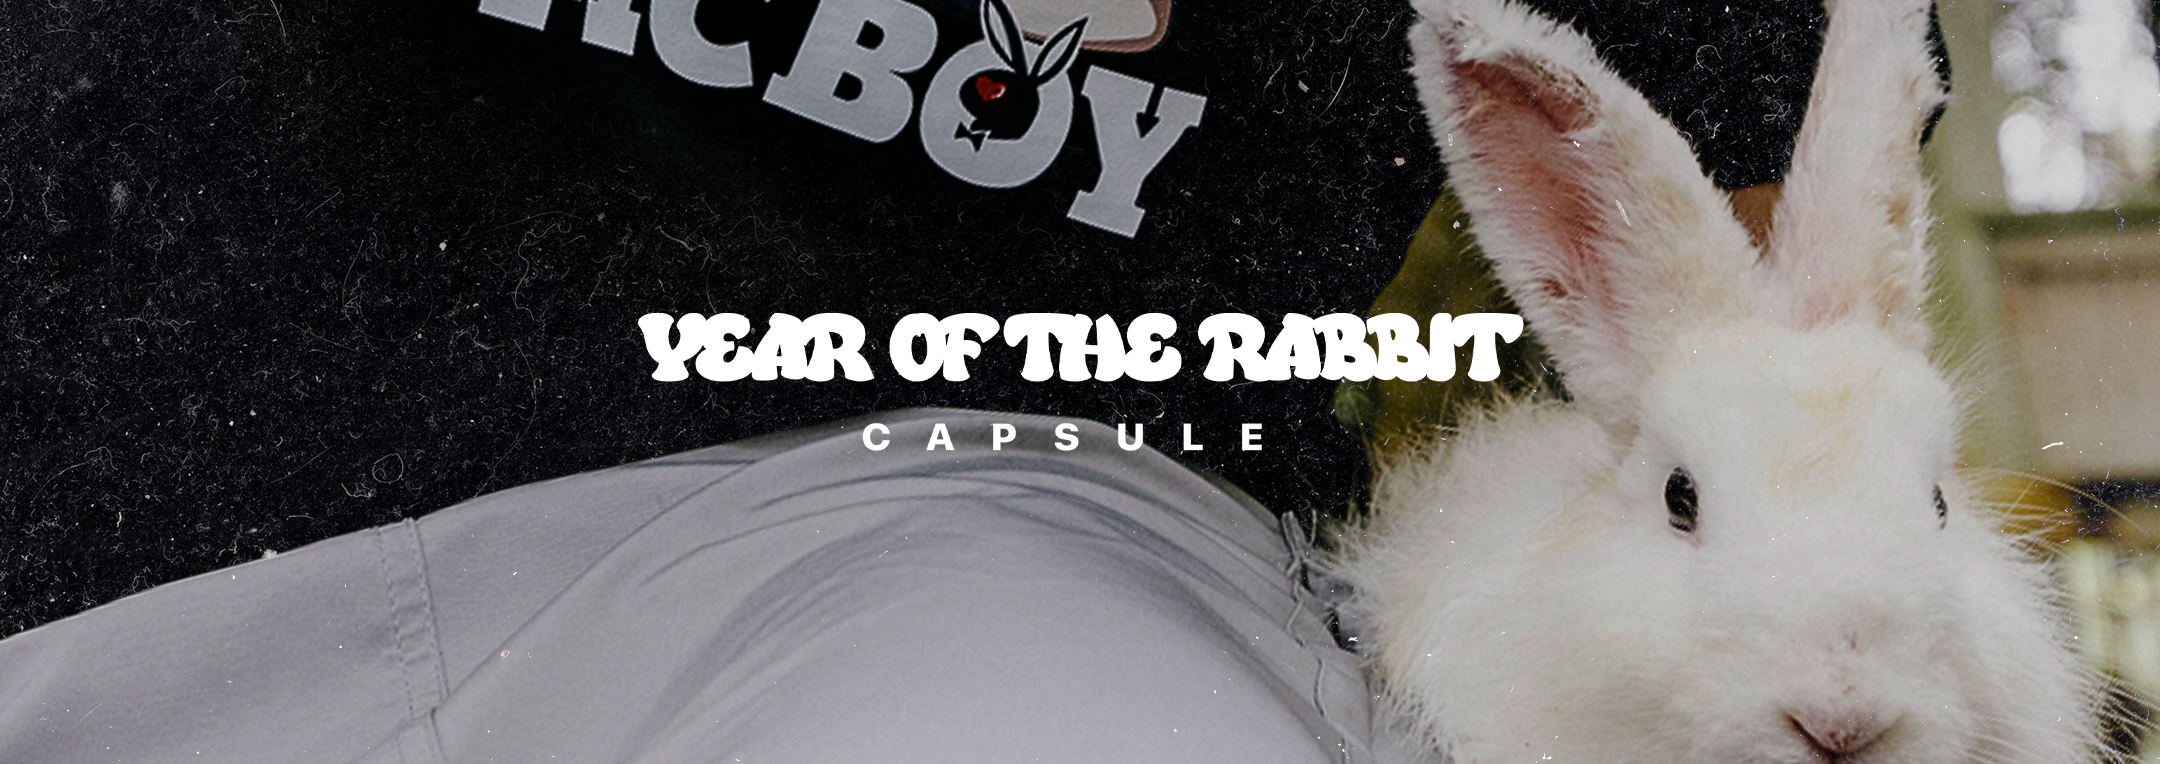 Year of the Rabbit Capsule